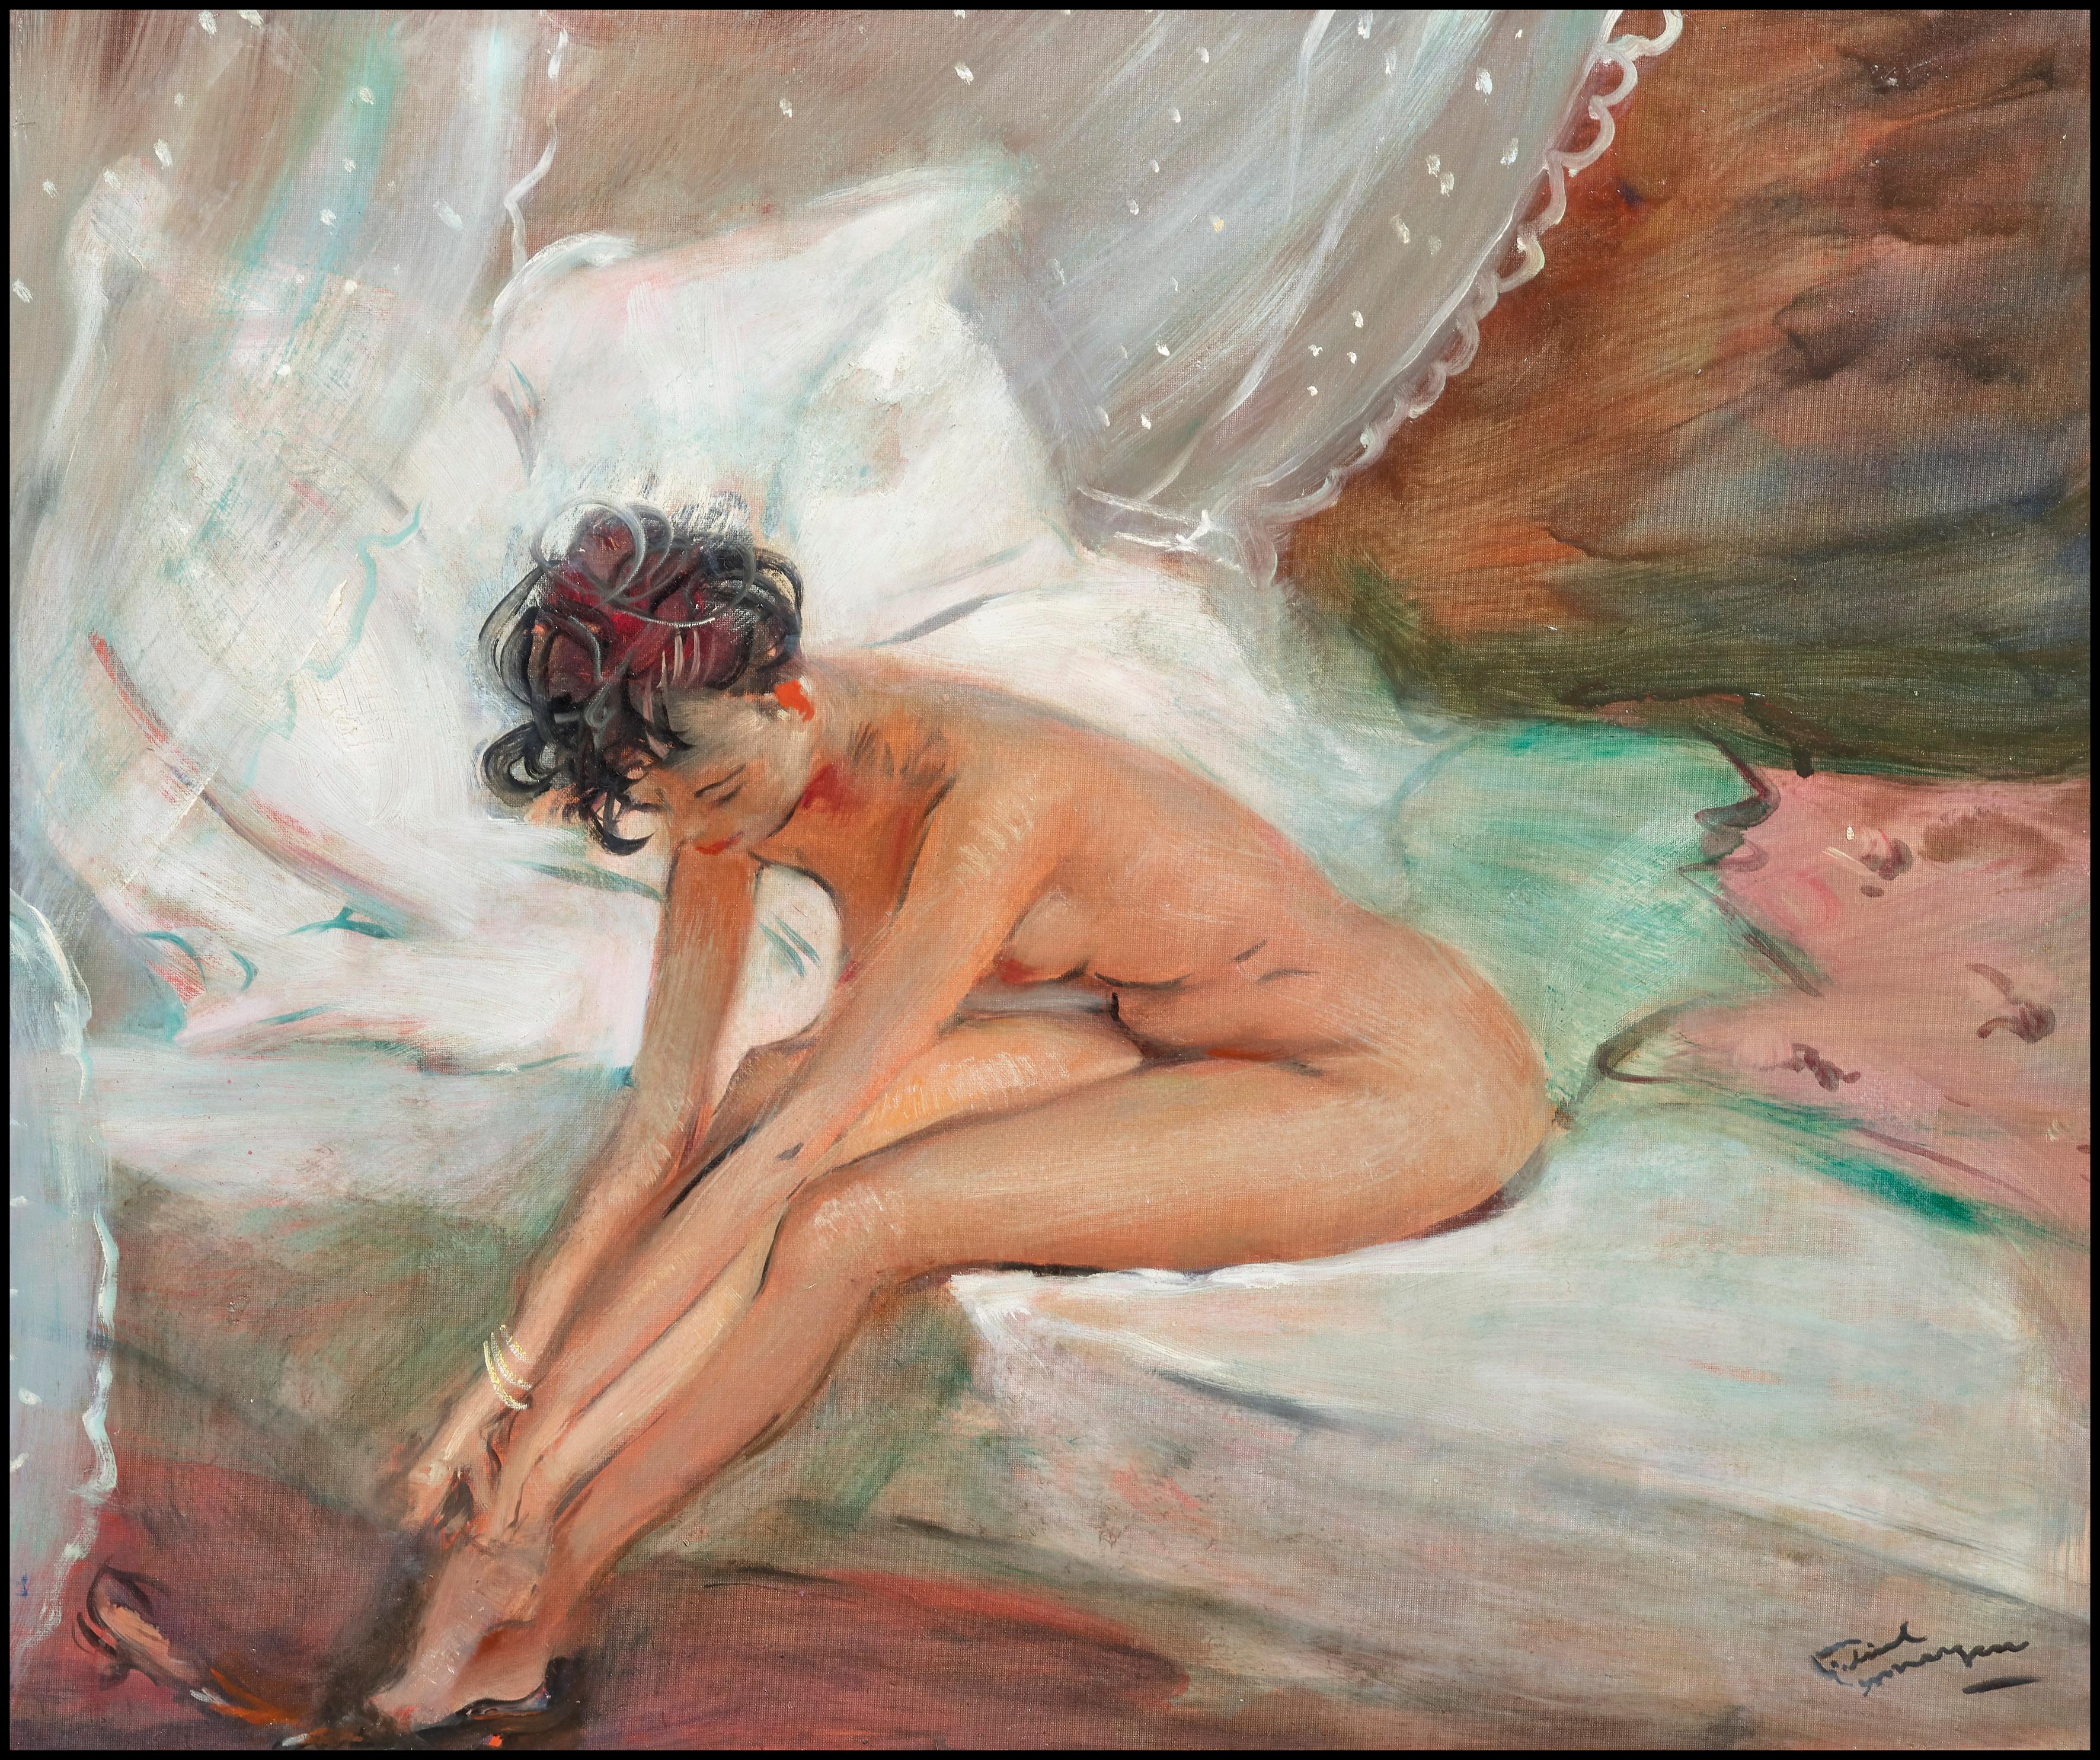 Jean-Gabriel Domergue Nude Painting - The Stockings